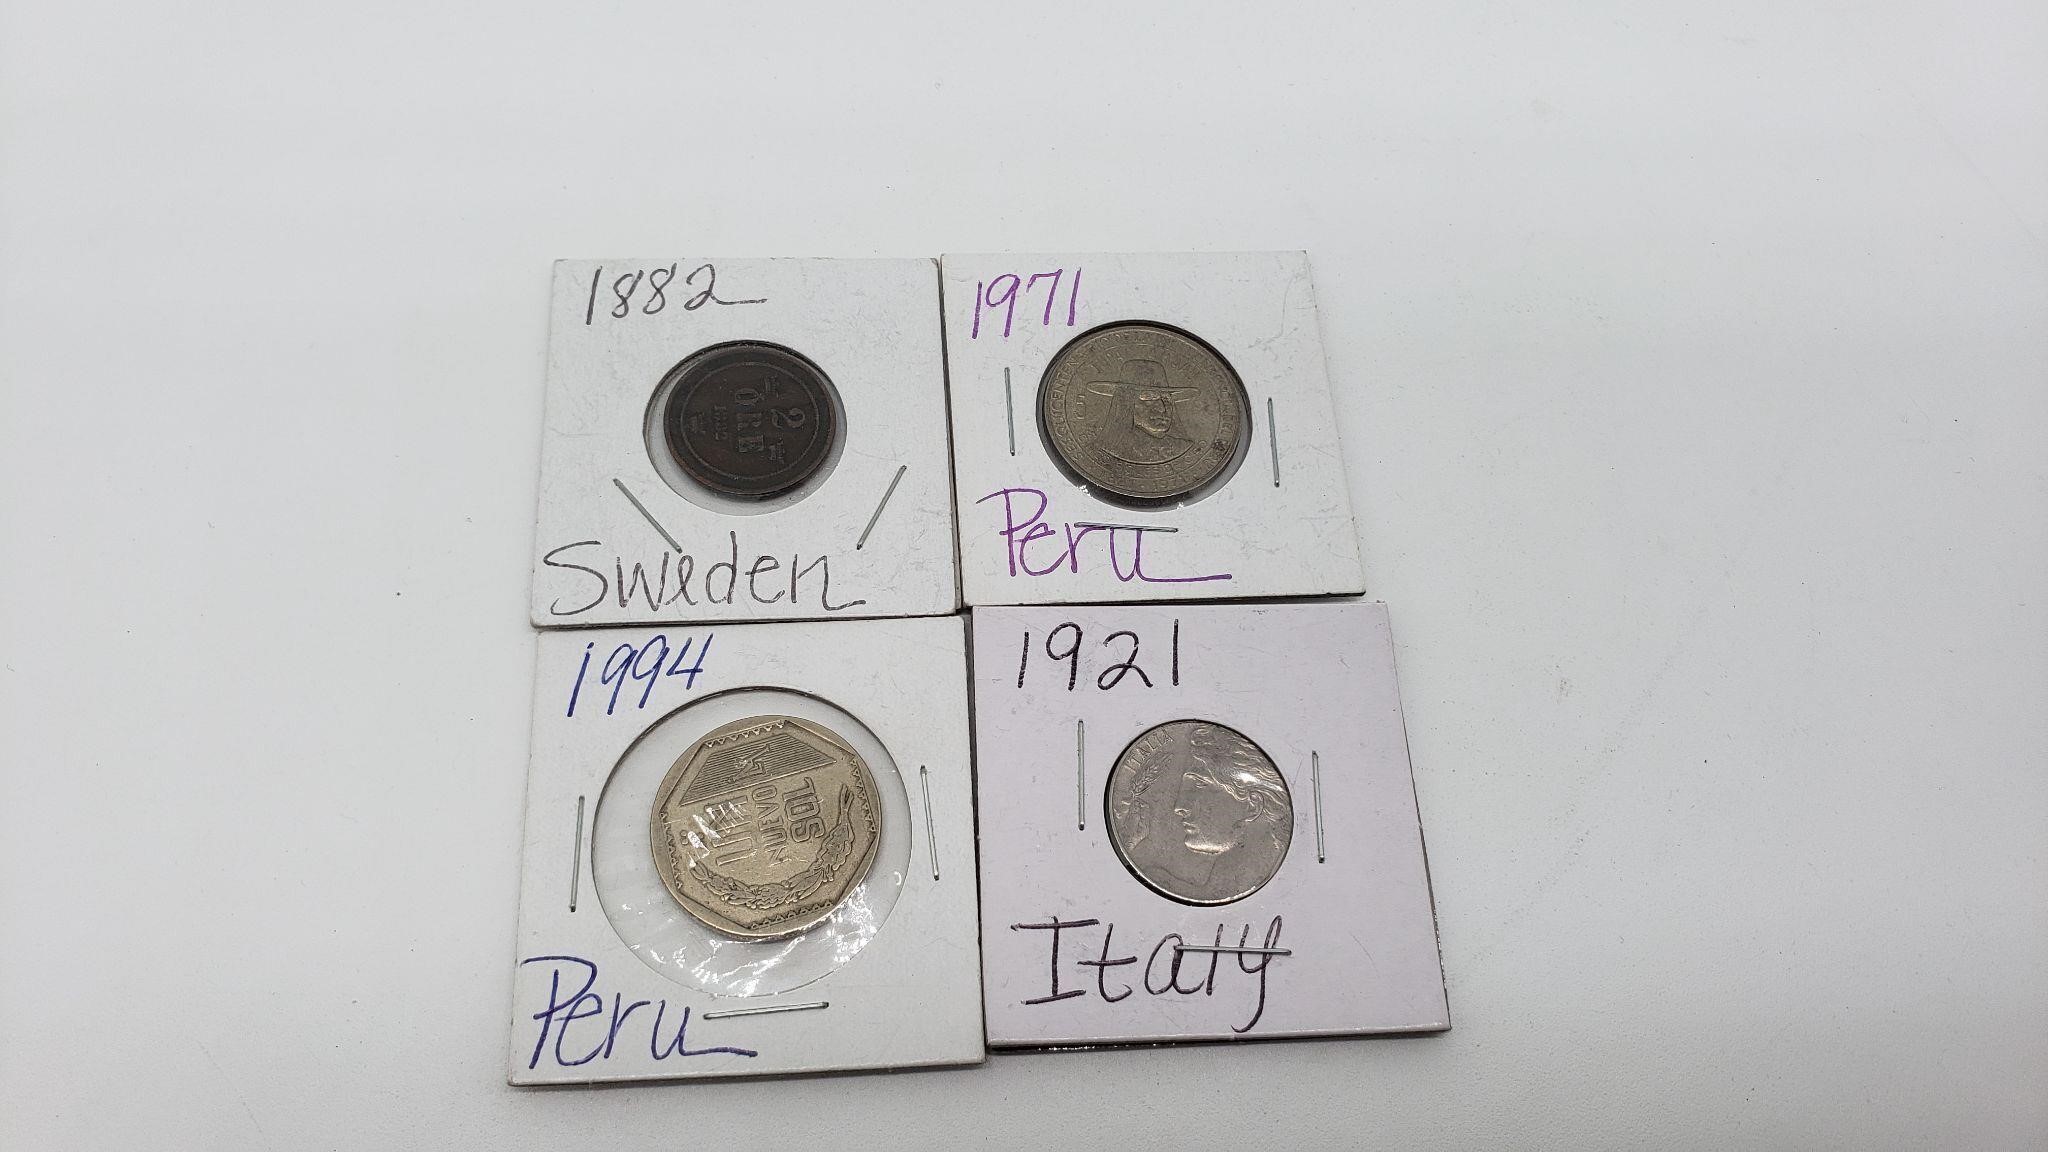 Coins 1882 Sweden, 1971 & 1994 Peru, 1921 Italy